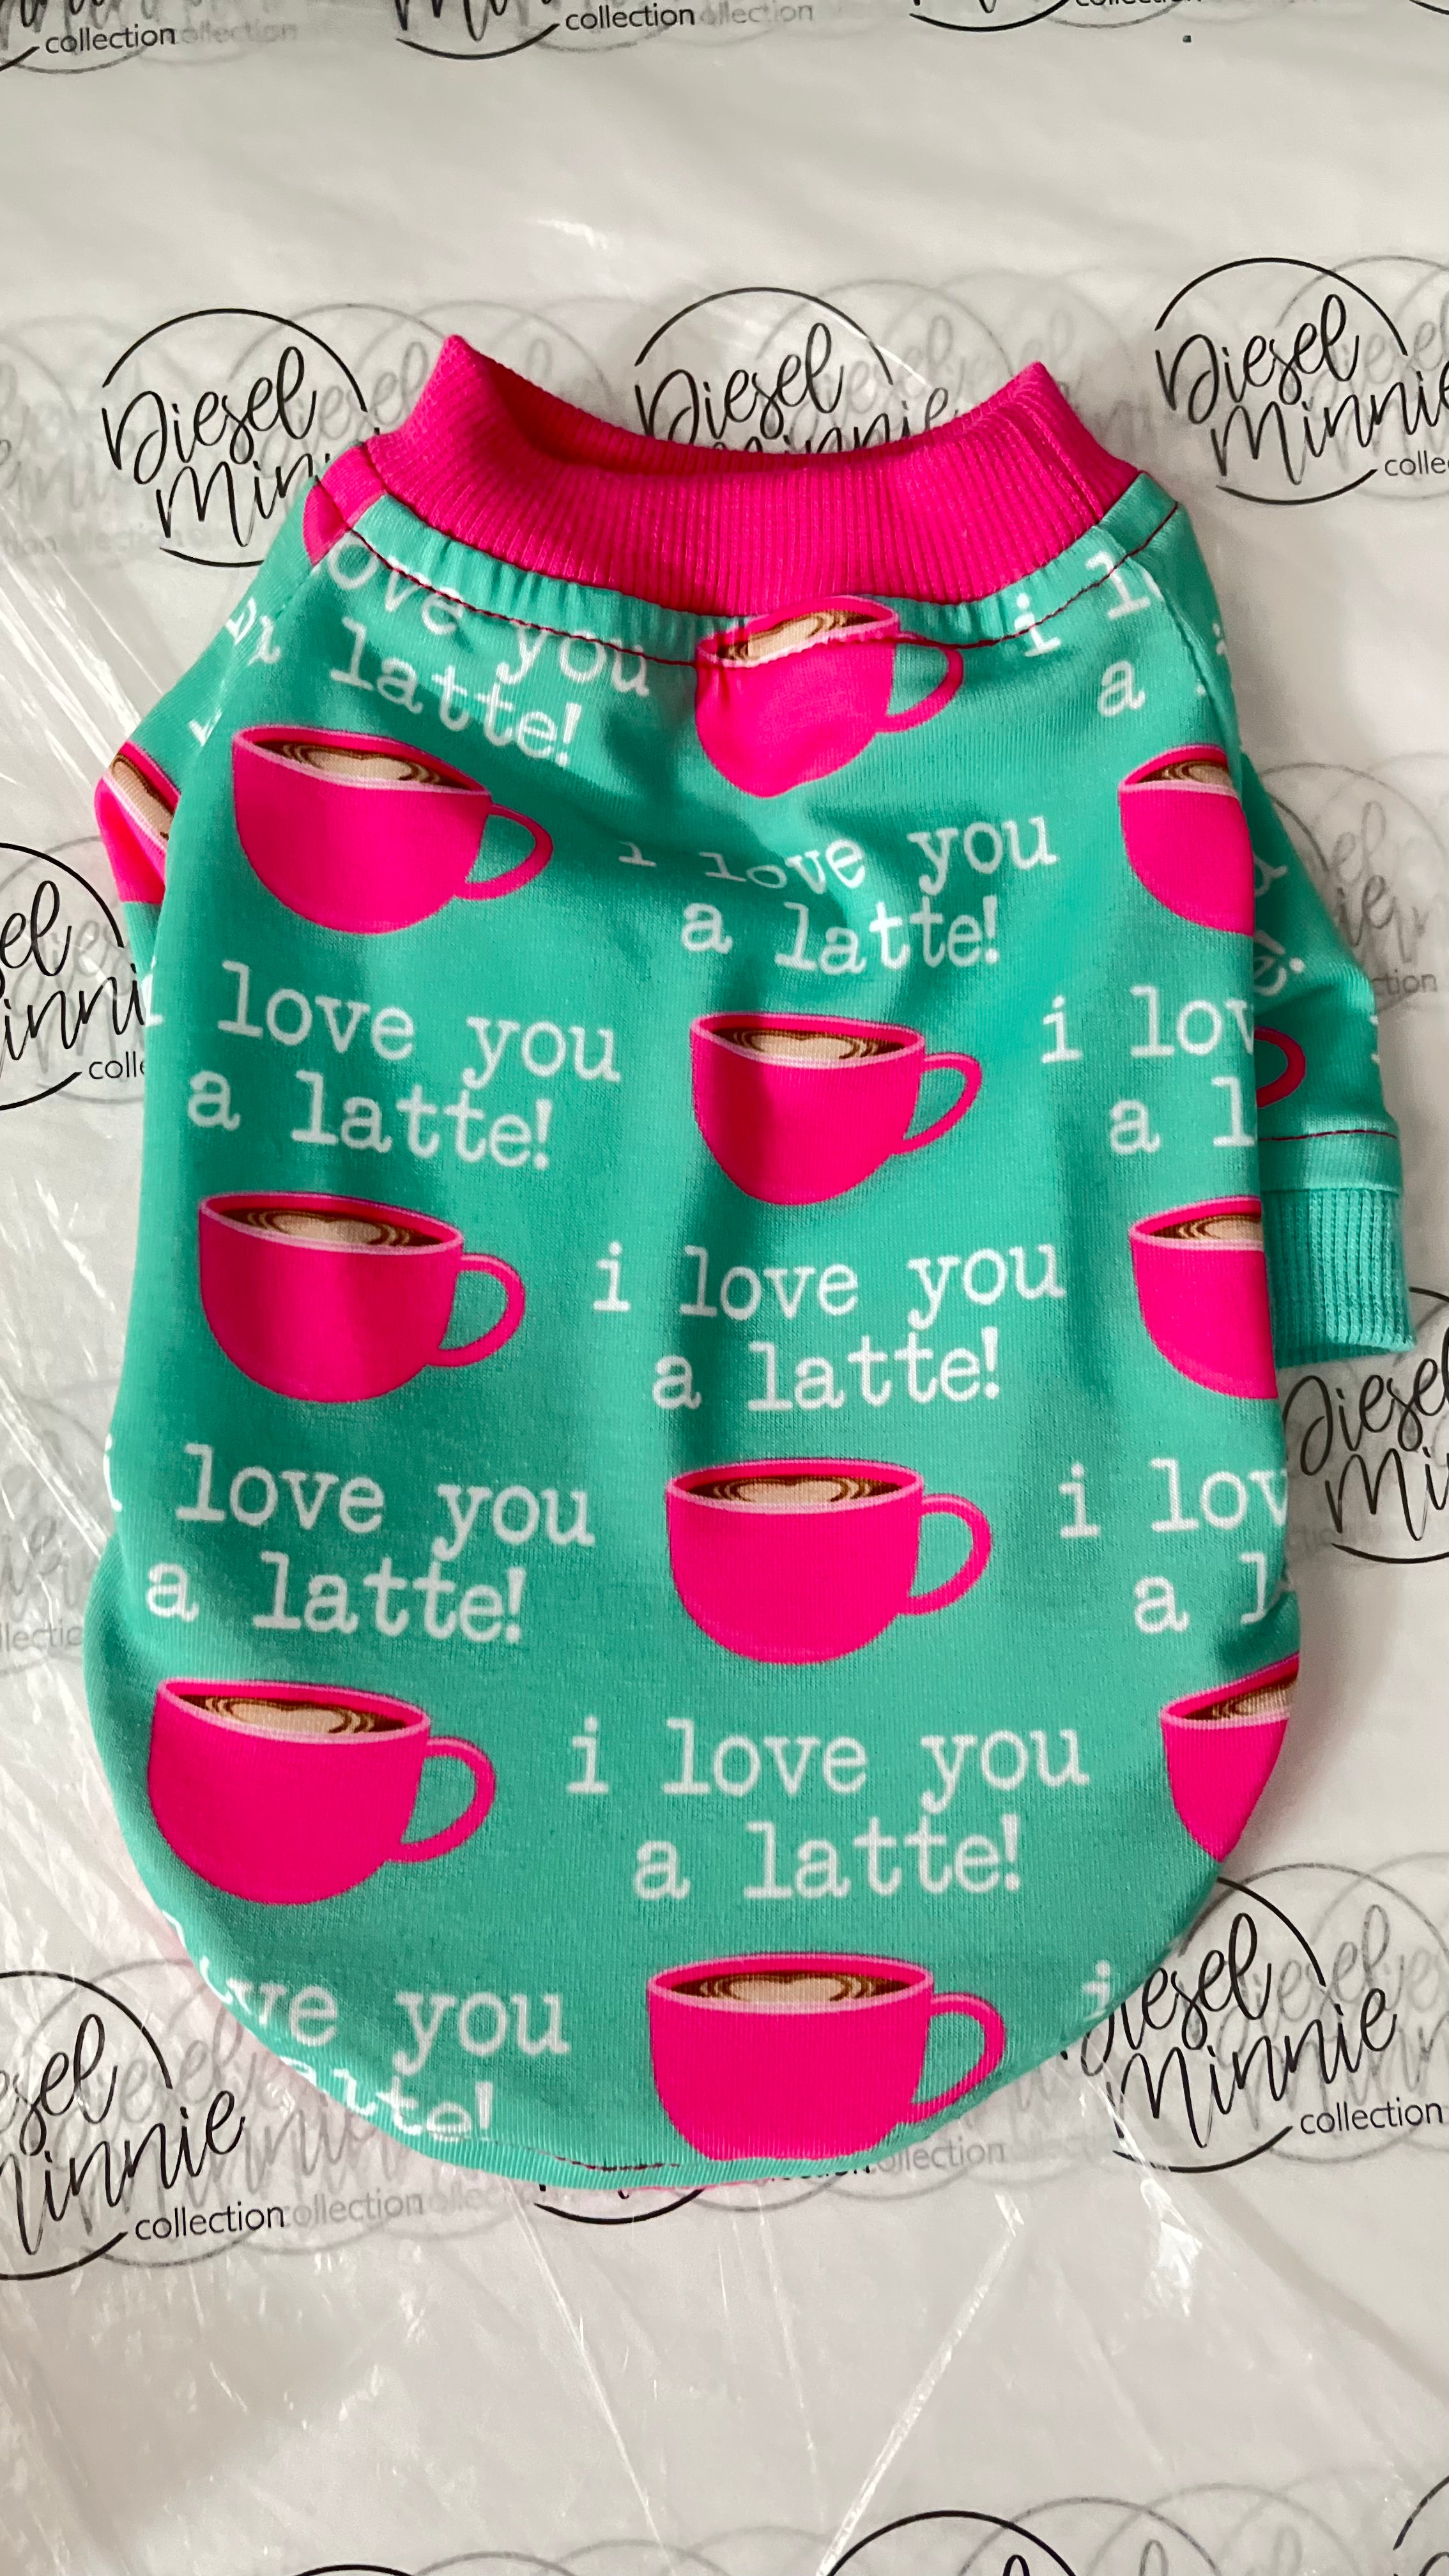 I love you a latte